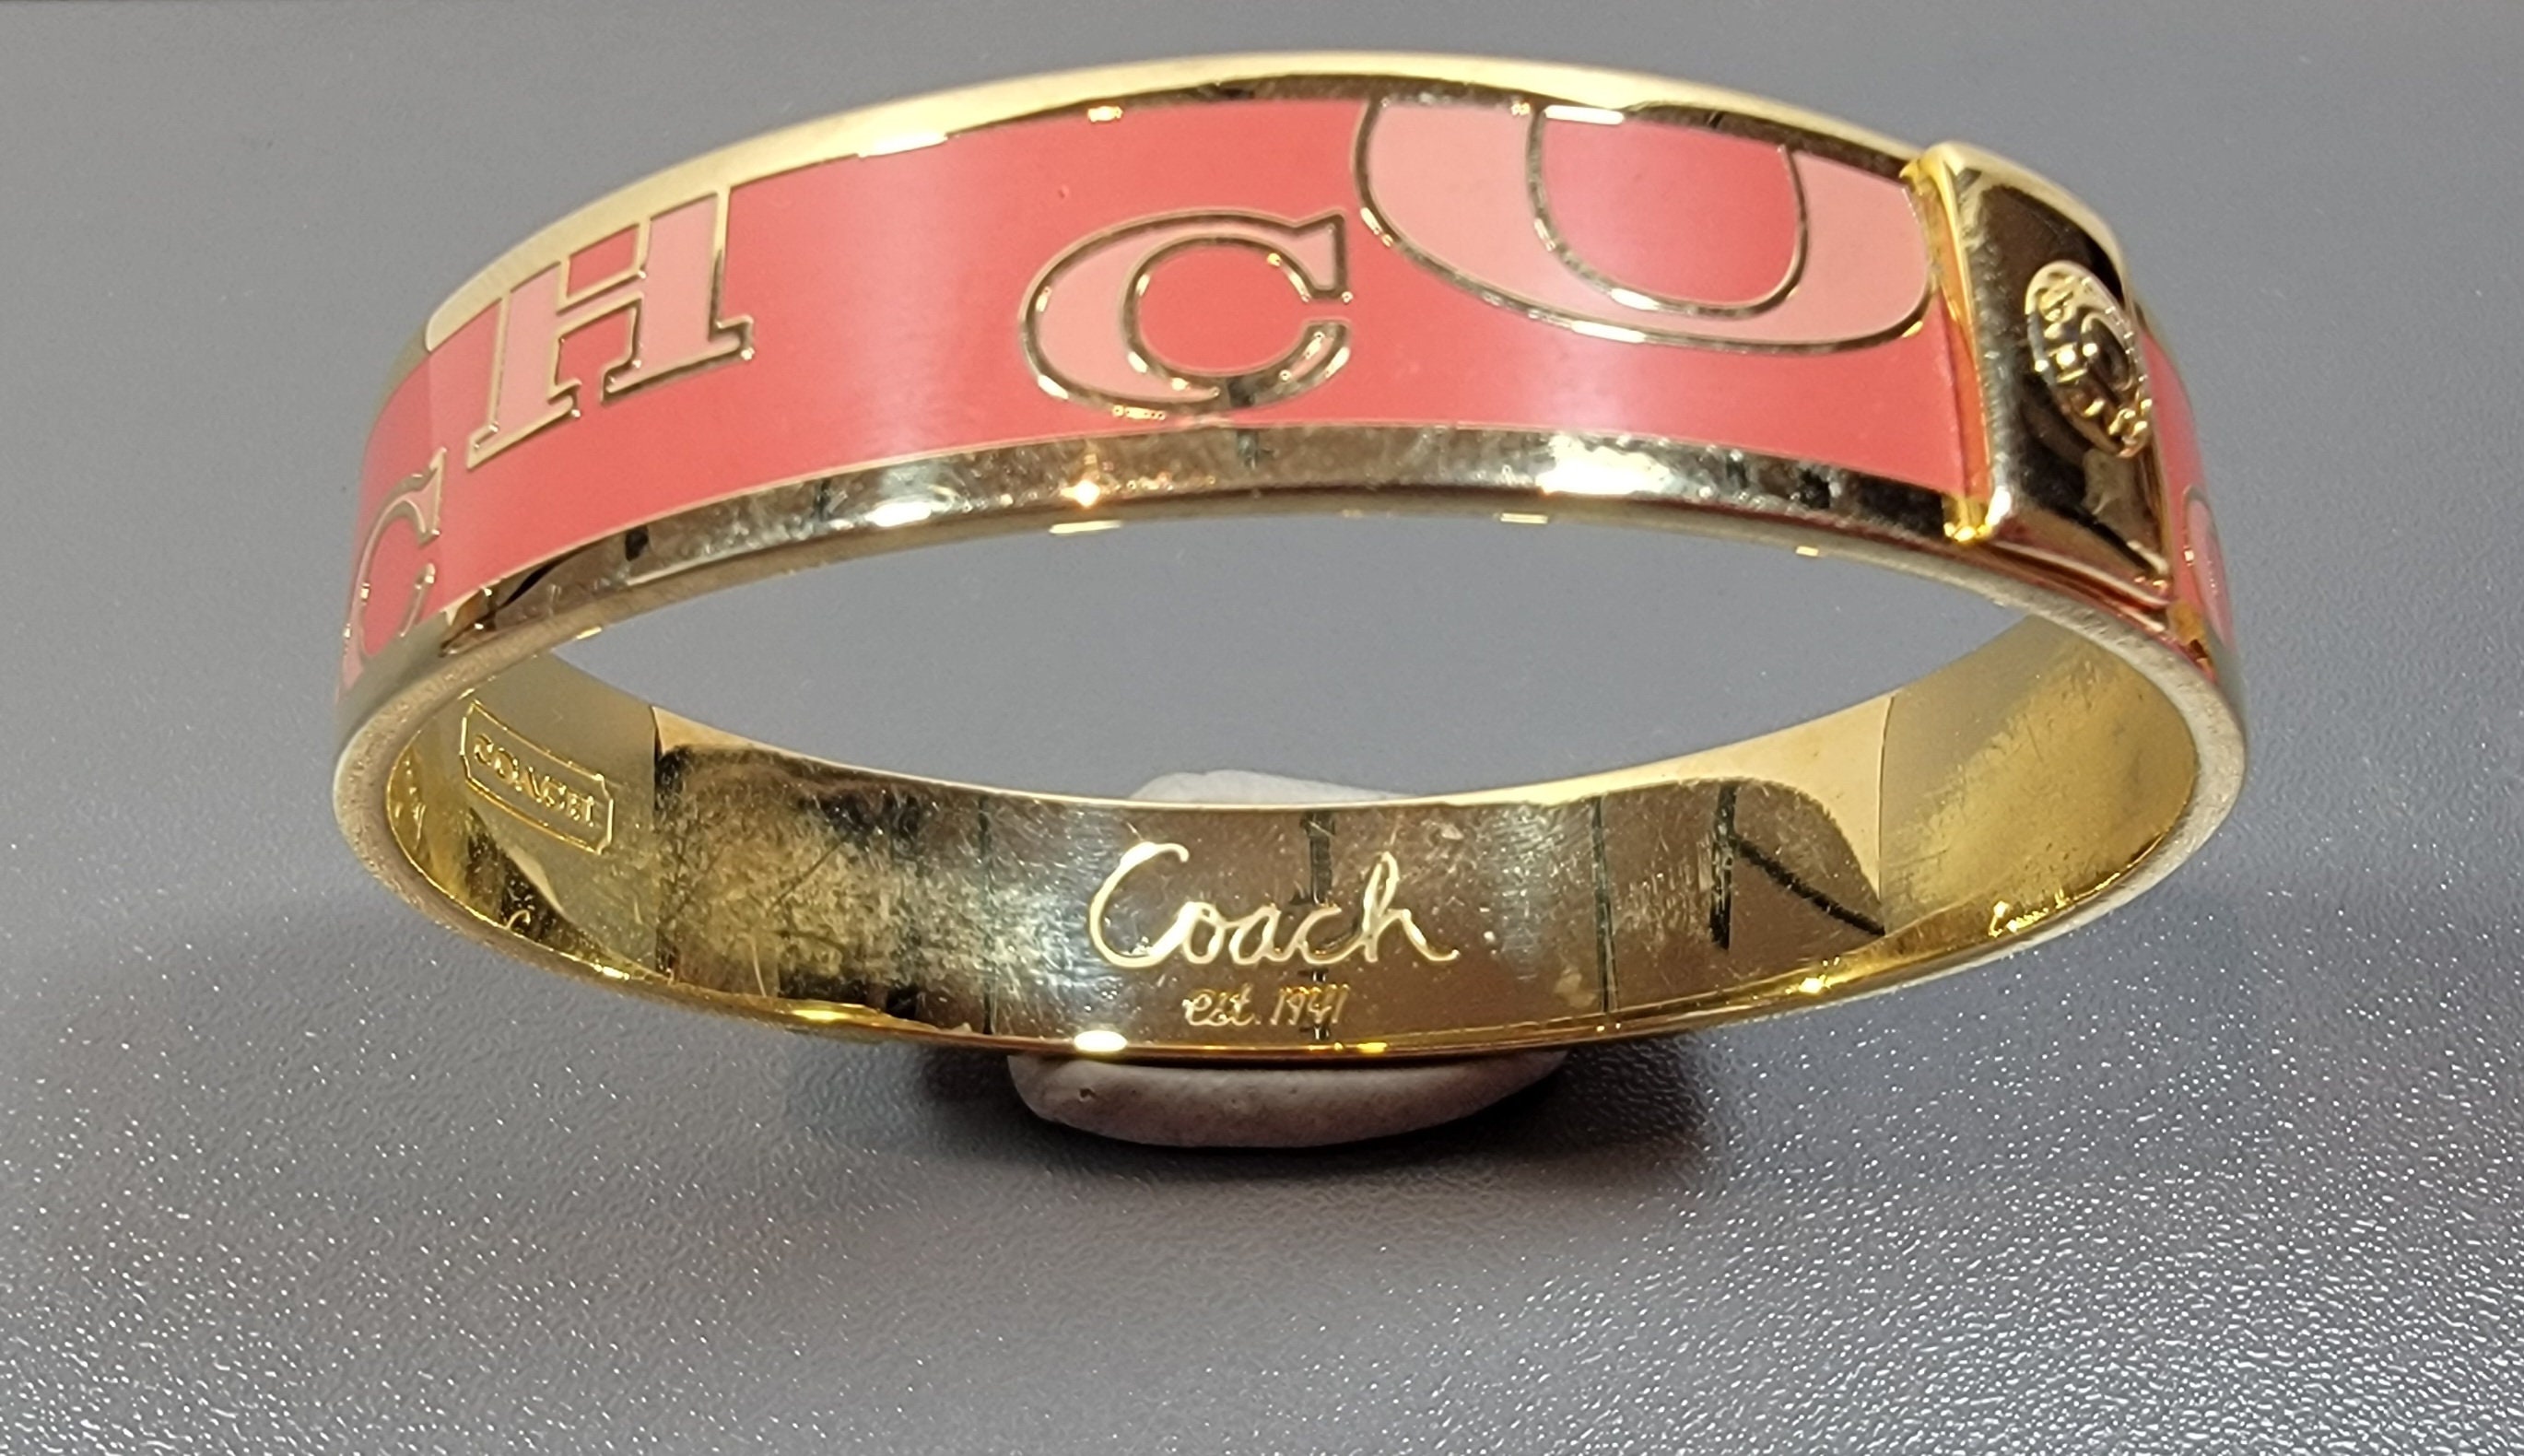 Coach bangle bracelet, gold tone | Bangle bracelets, Bangles, Gold tones